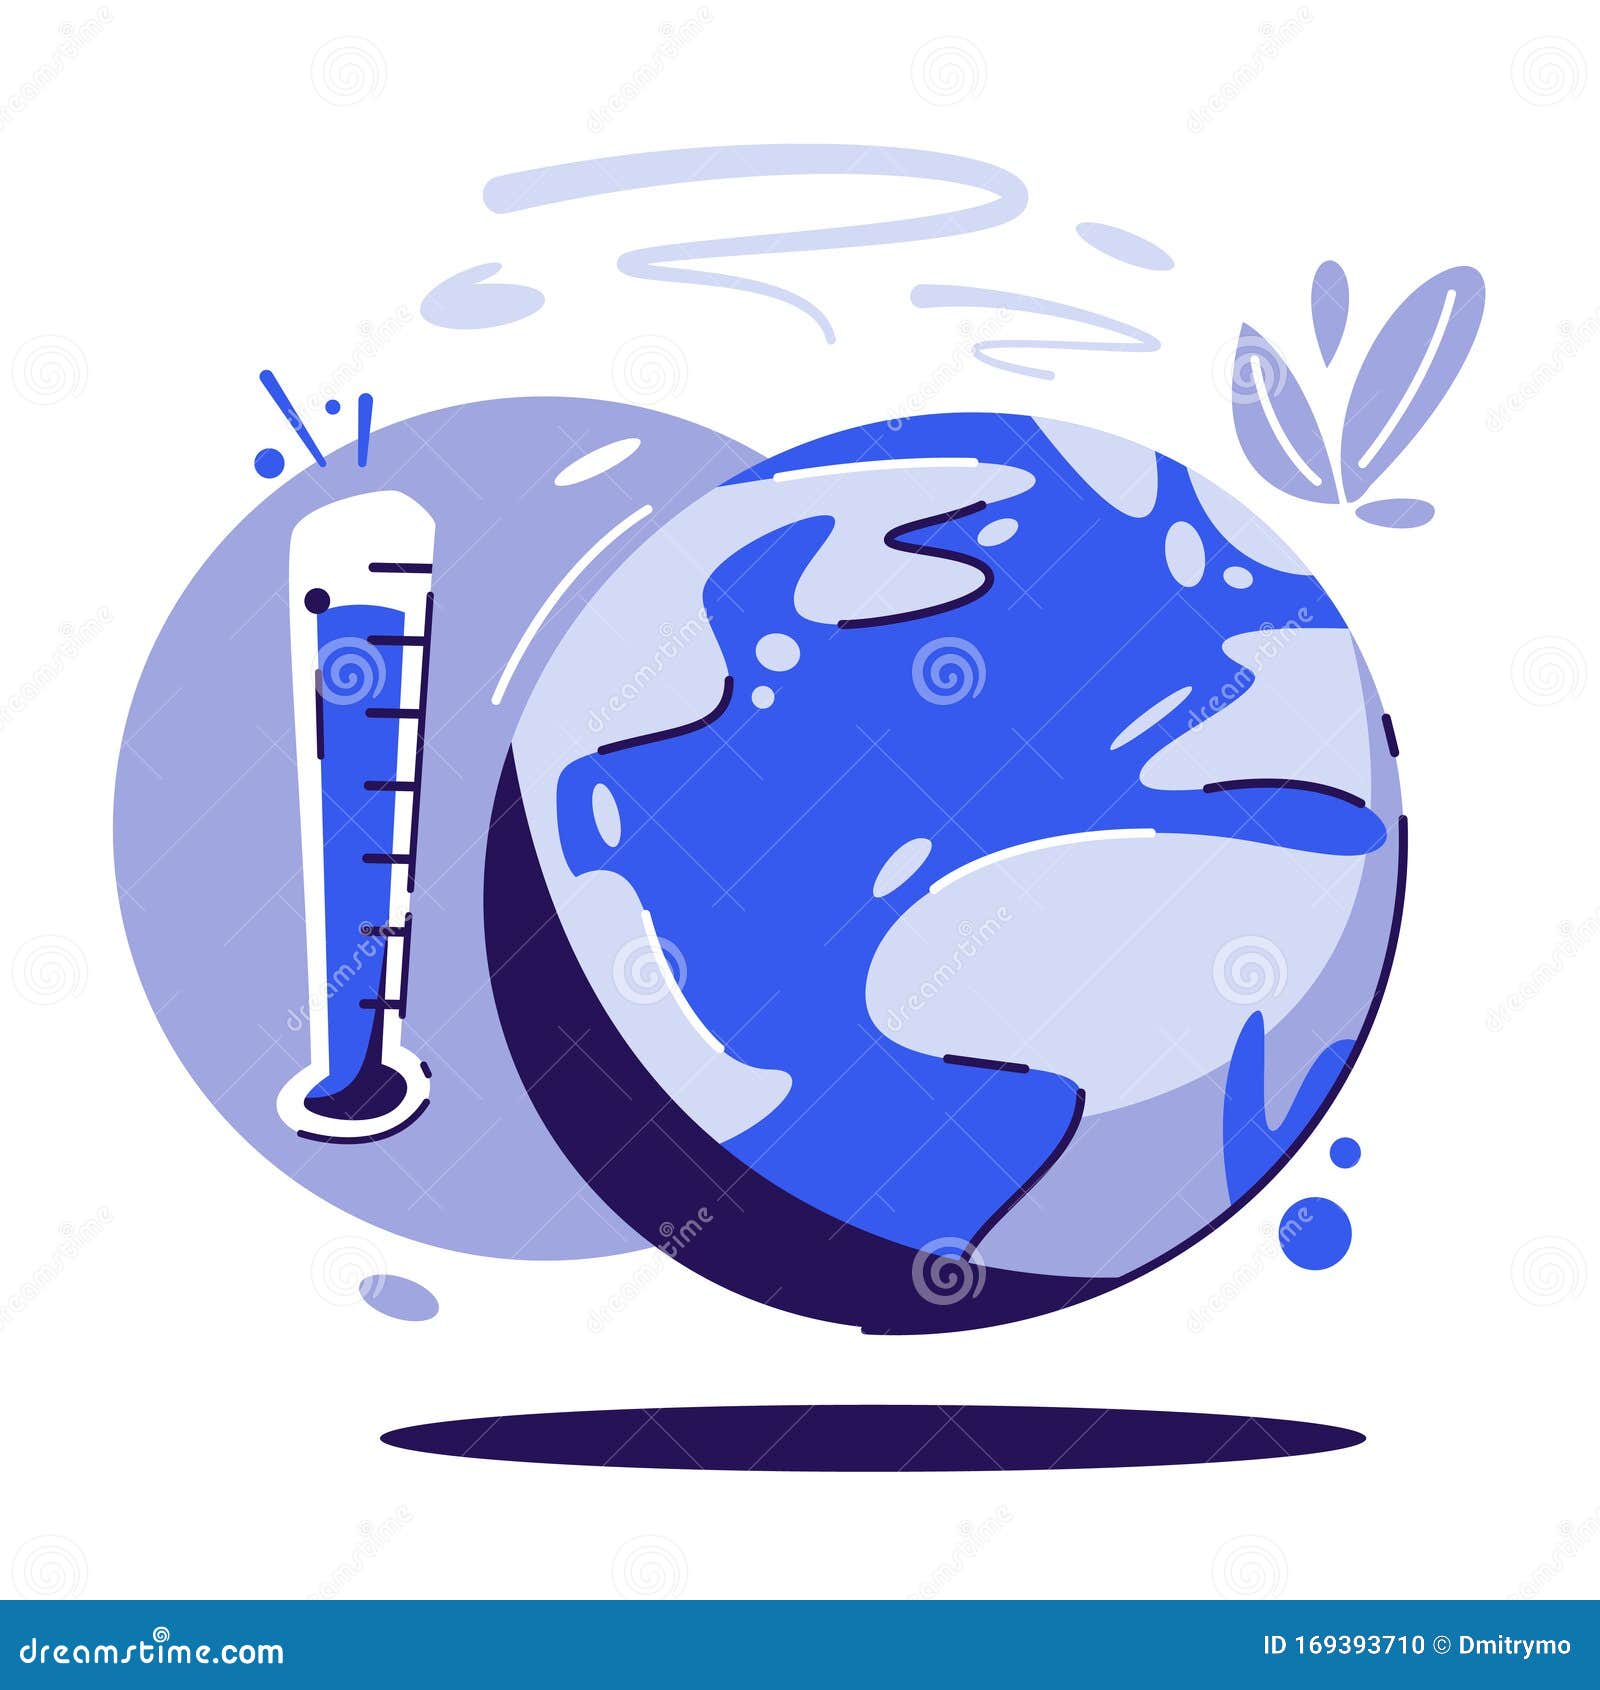 Concepto De Calentamiento Global Ilustración Vectorial De Dibujos Animados  Pegatina O Logotipo Ilustración del Vector - Ilustración de hoja, bandera:  169393710